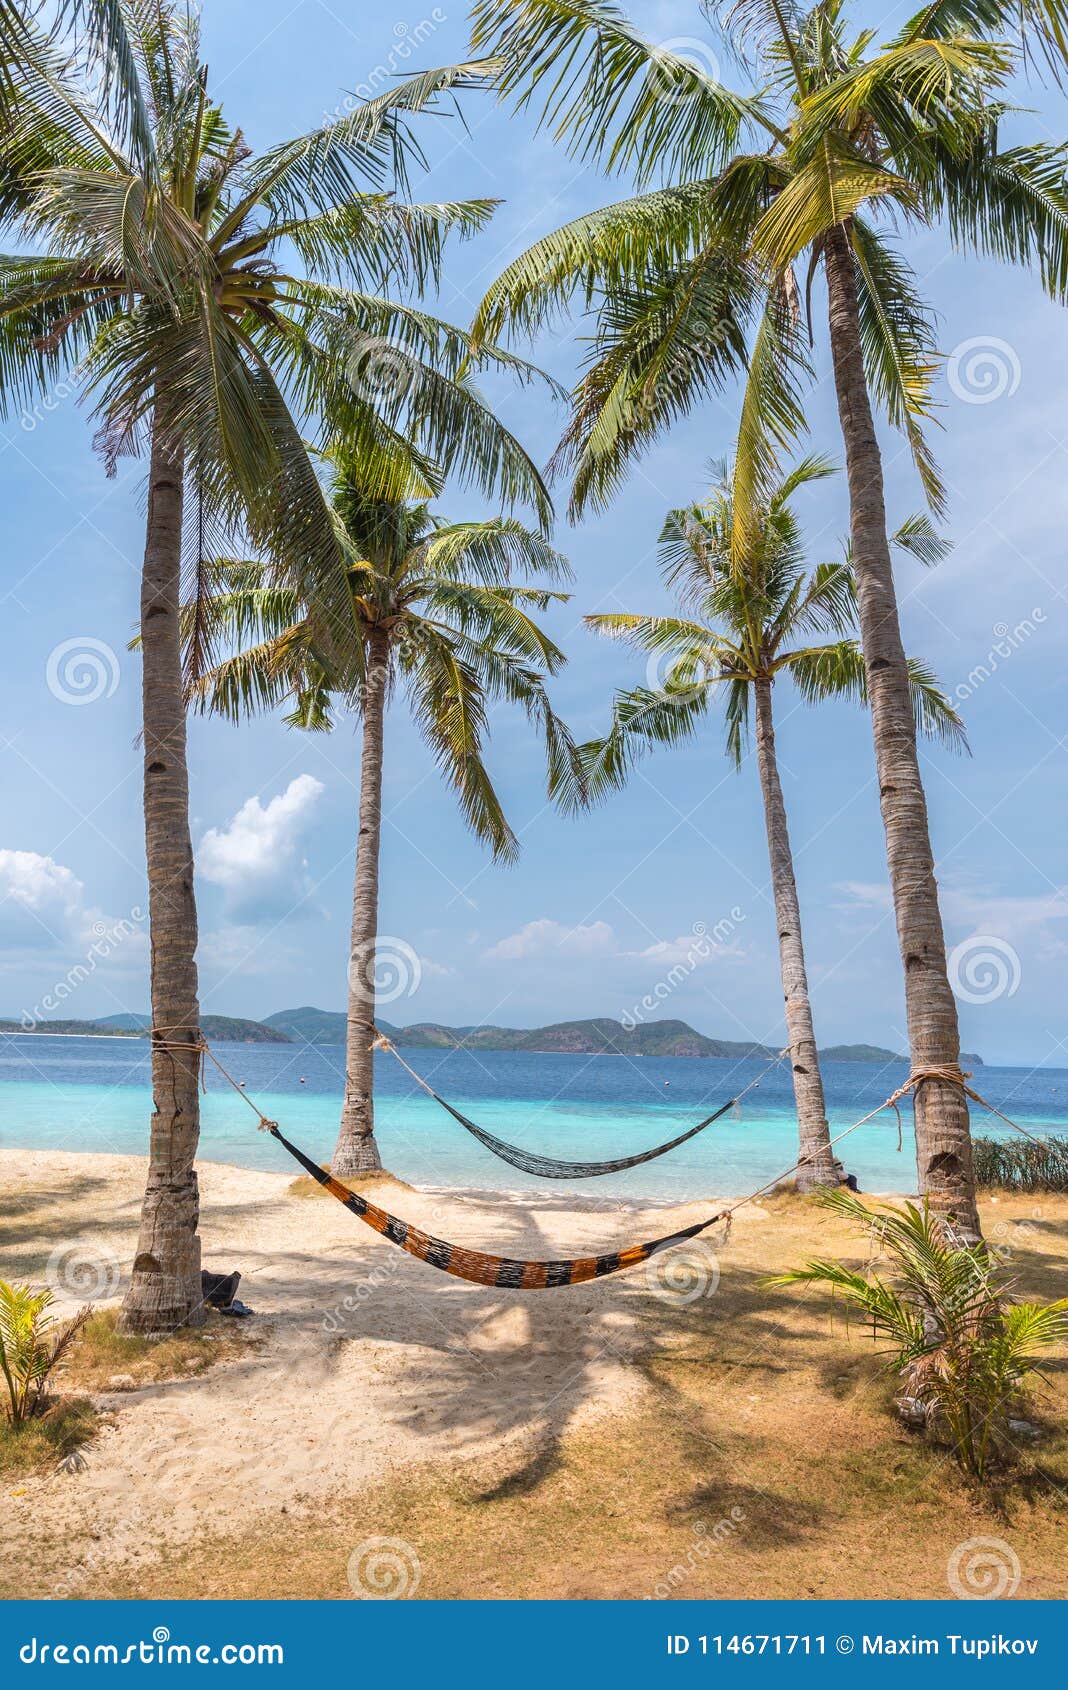 view of hammocks on tropical beach on the banana island